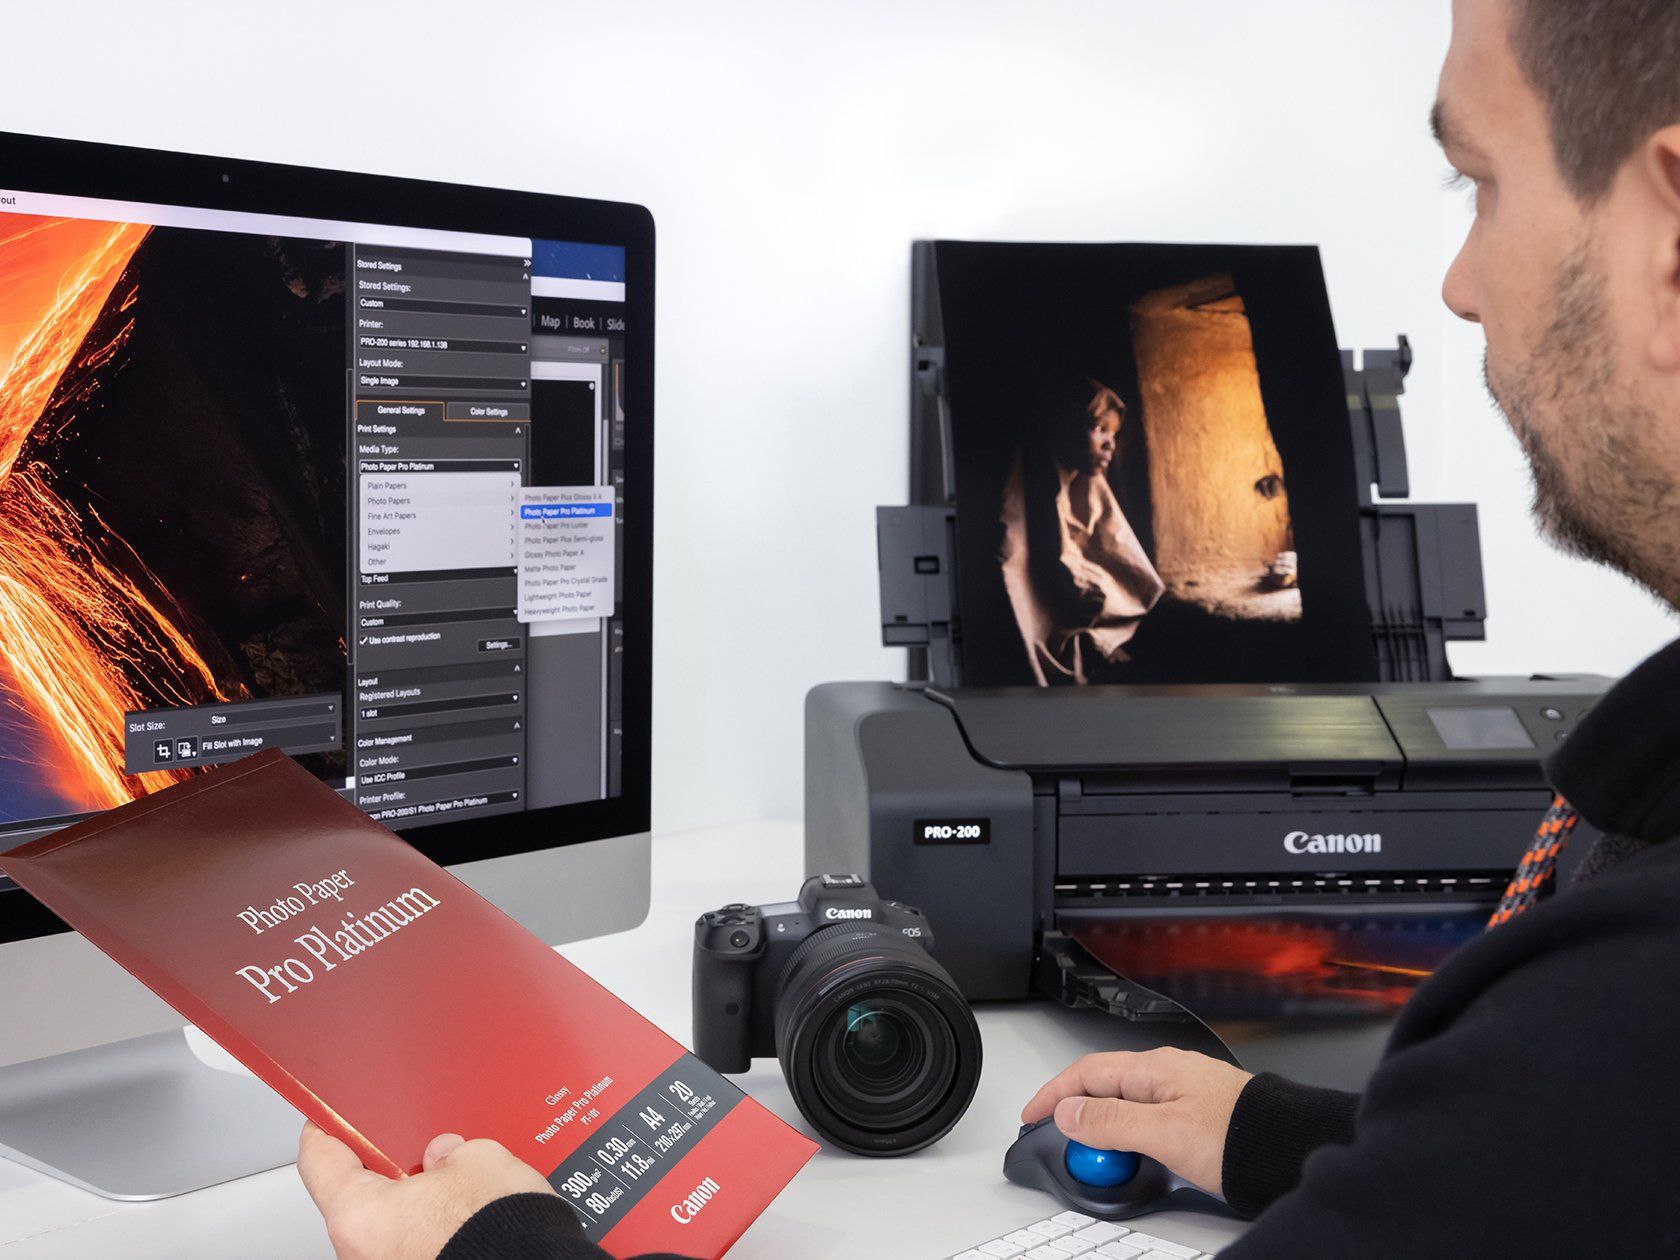 Canon PIXMA Pro 200 Professional 13 Wireless Inkjet Photo Printer 4280C002